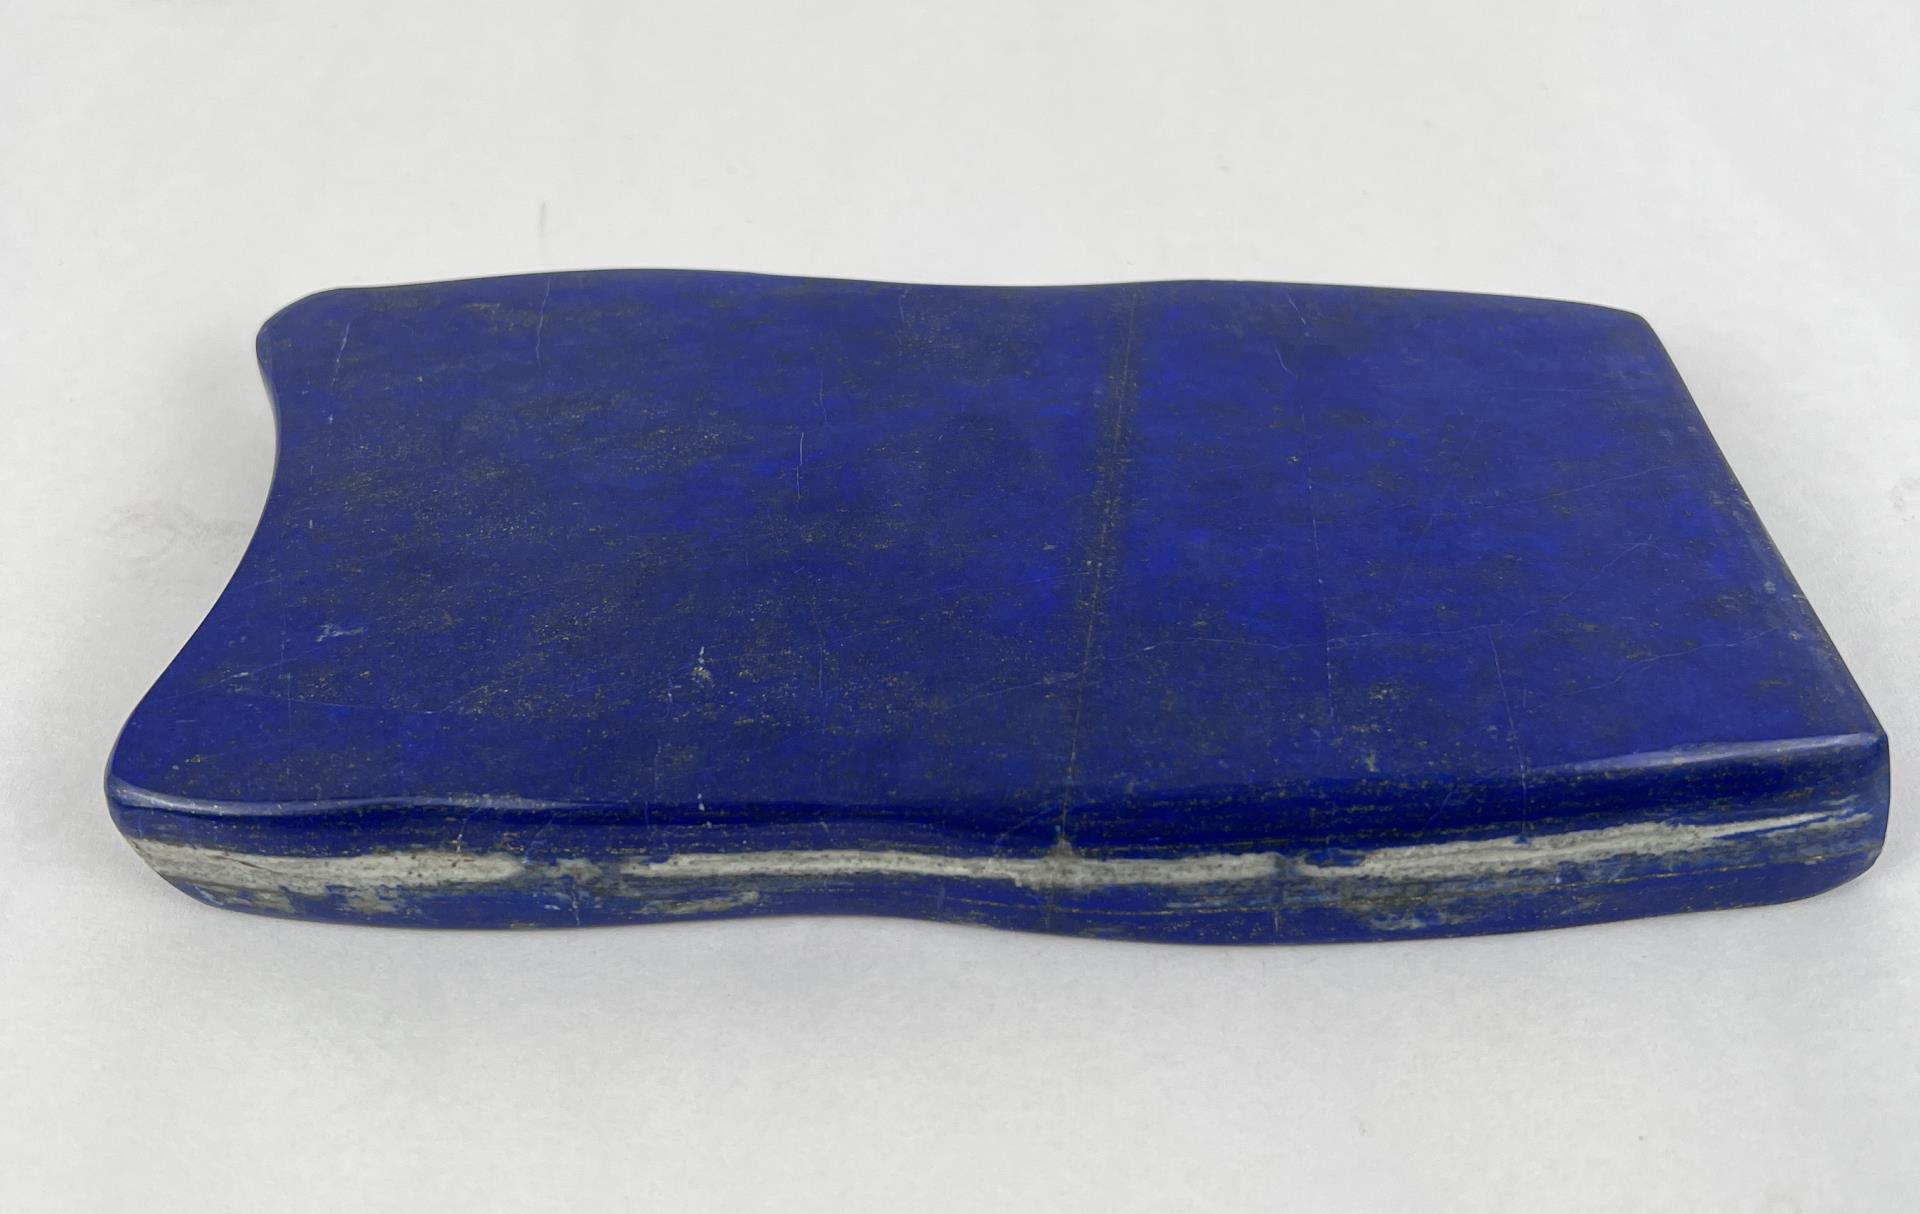 7356 Carats of Lapis Lazuli Stone Carving Media